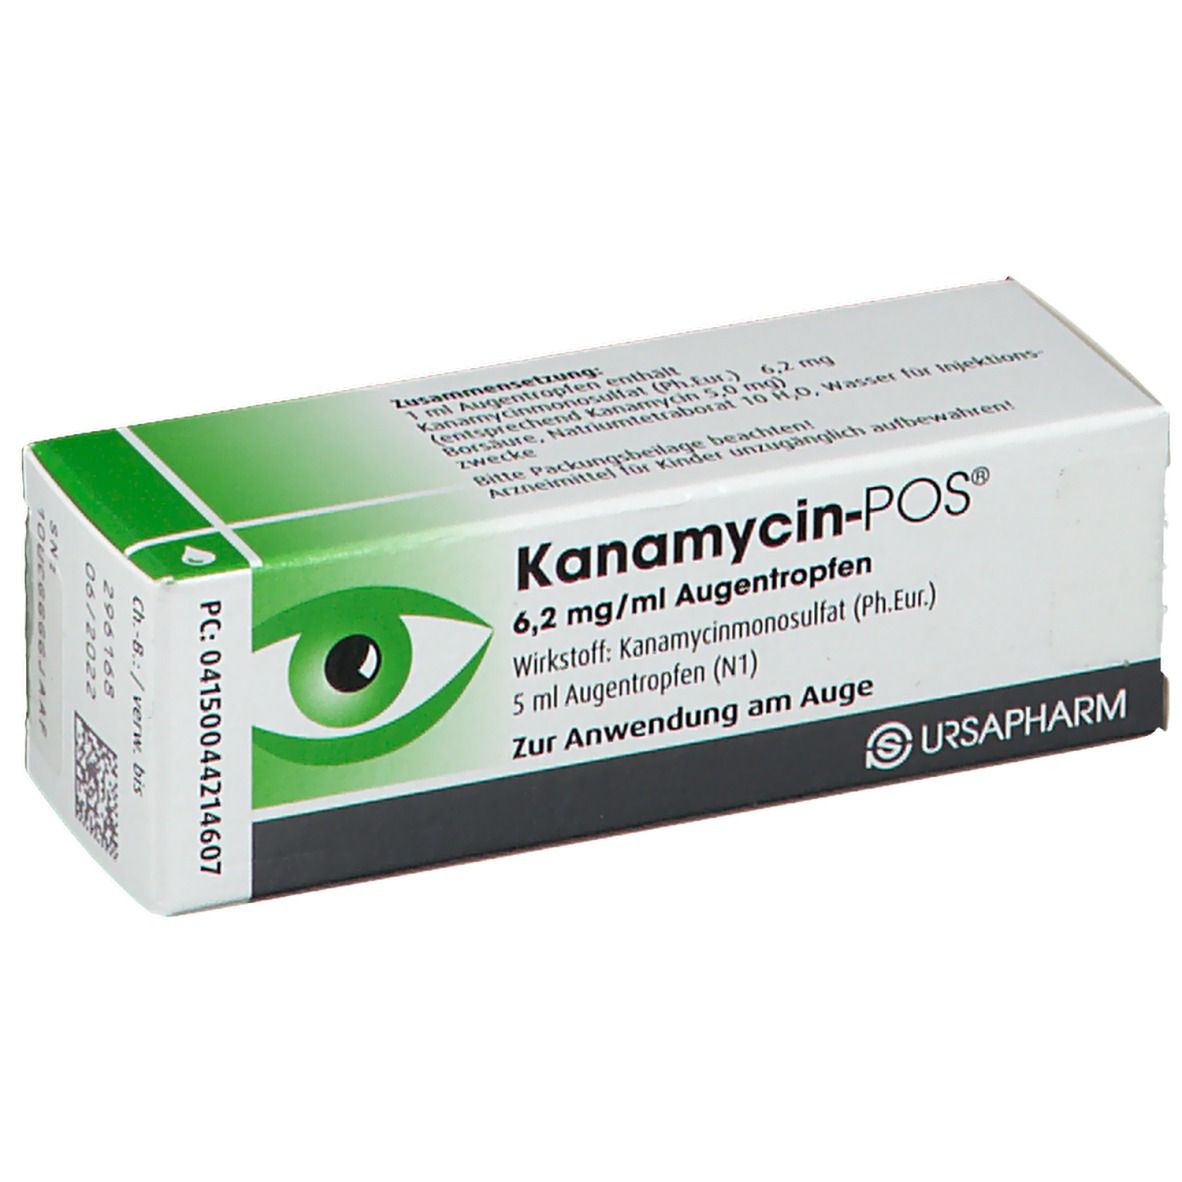 Kanamycin-POS Augentropfen